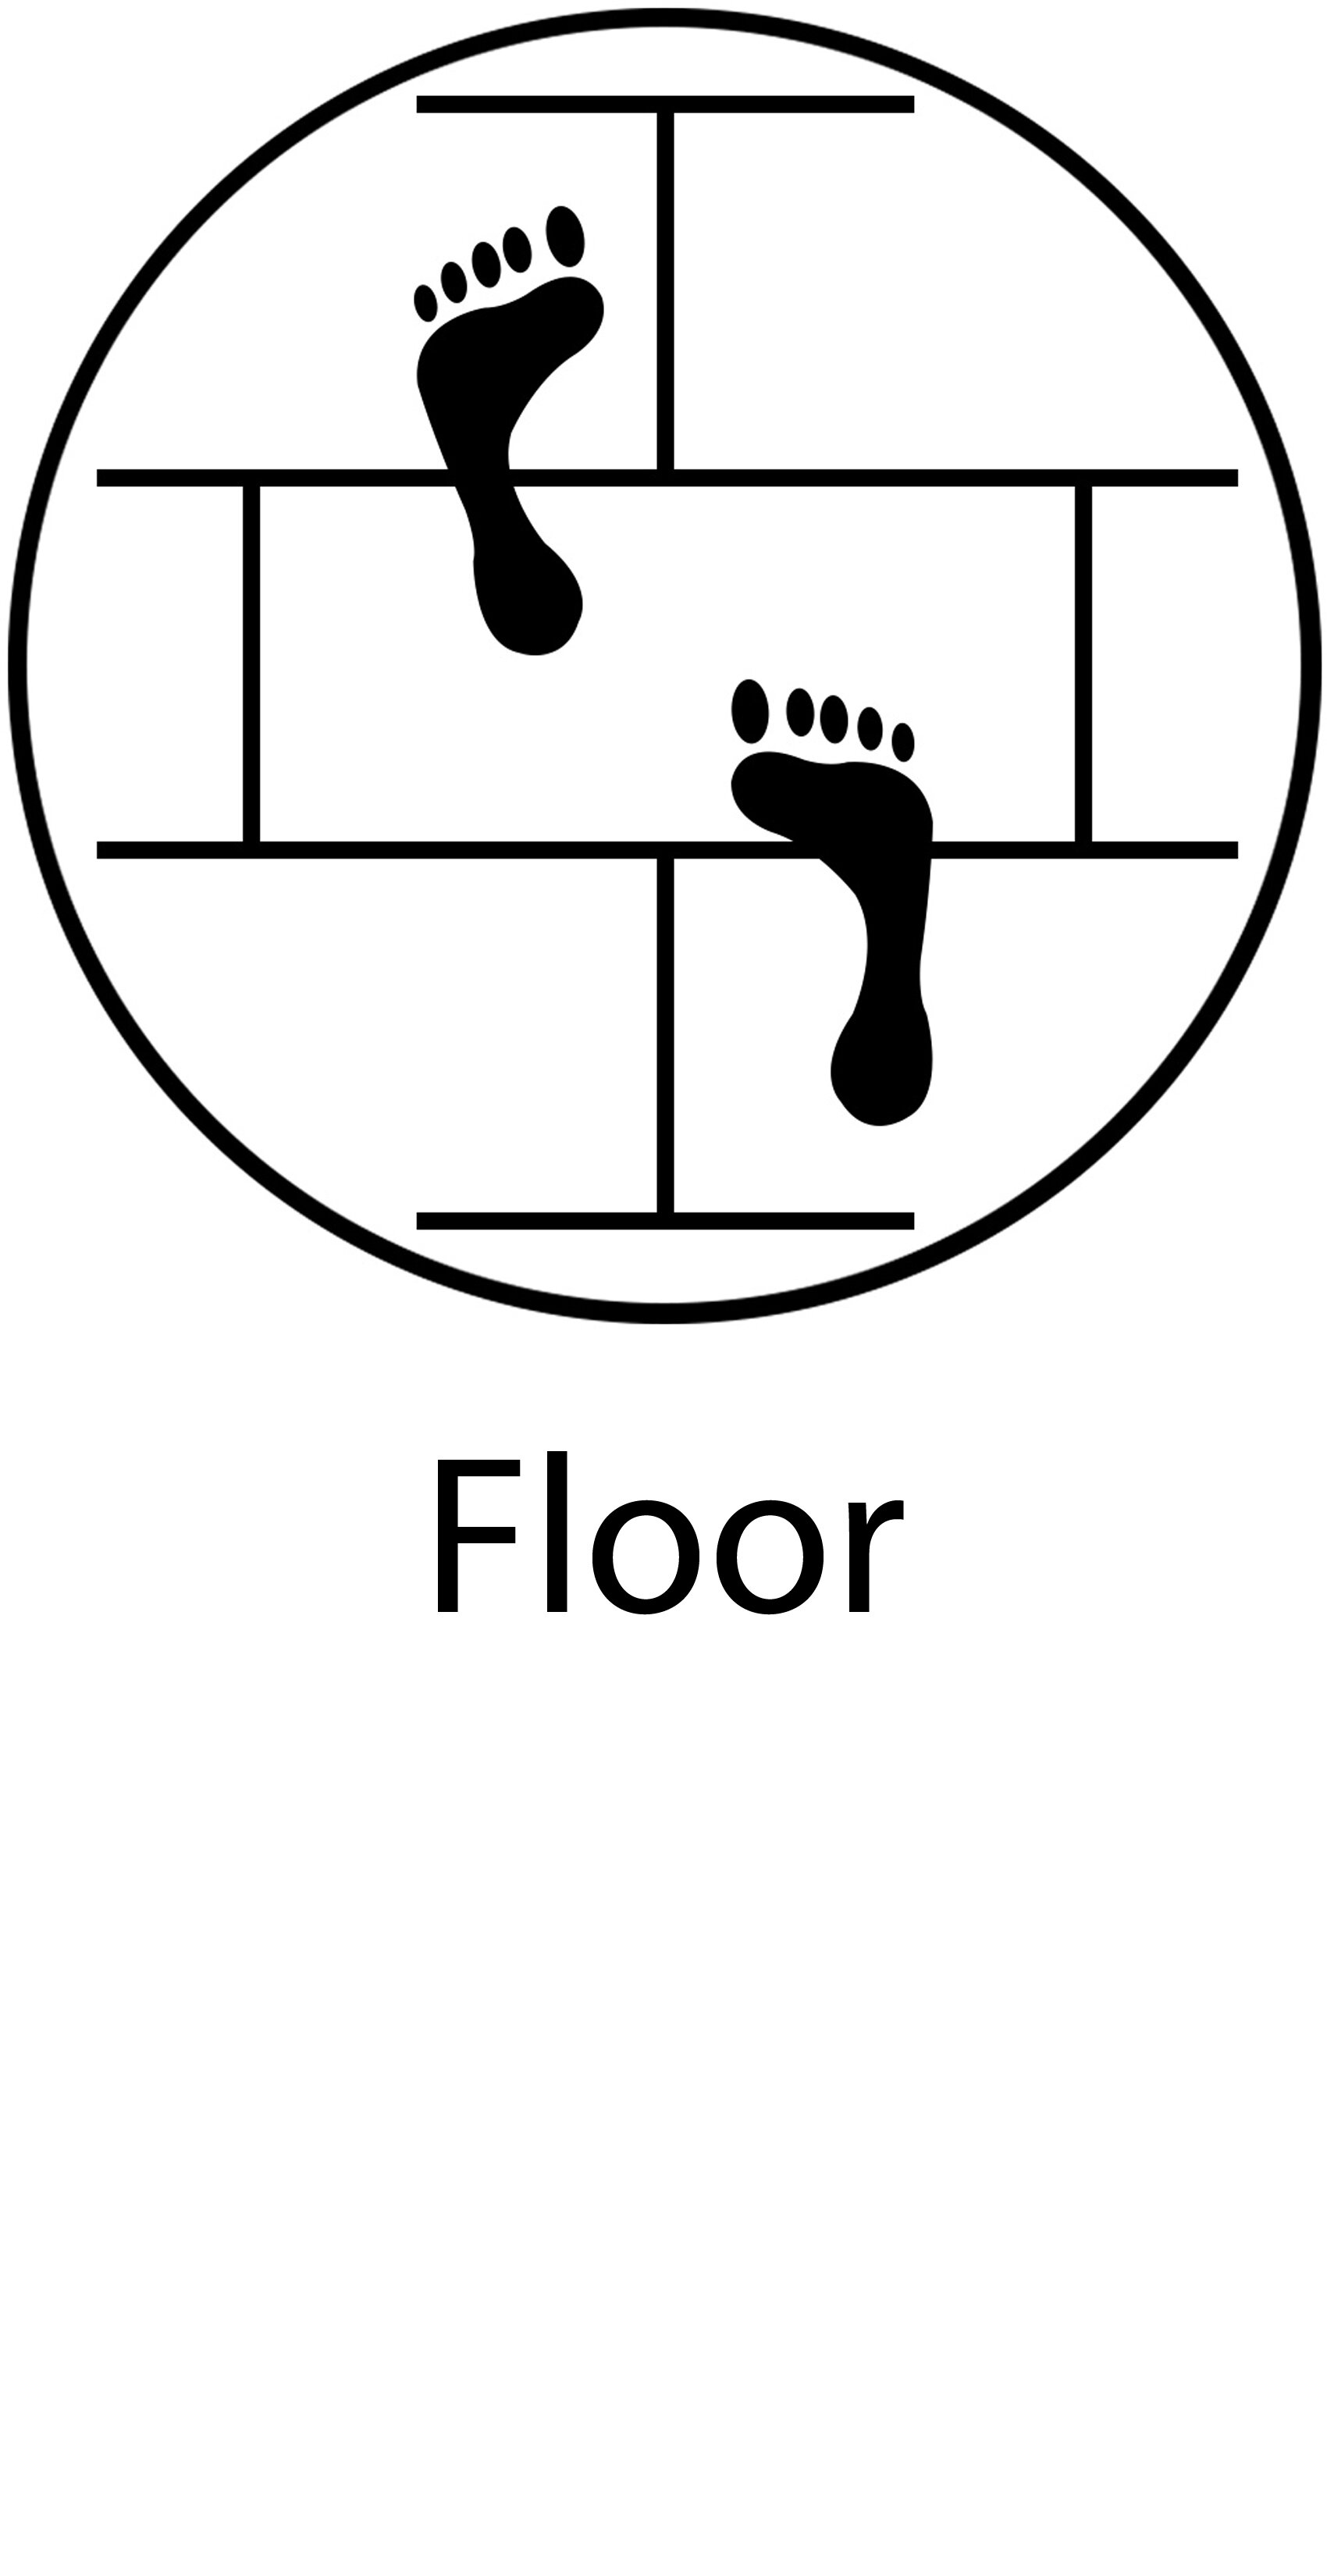 02 Floor.jpg